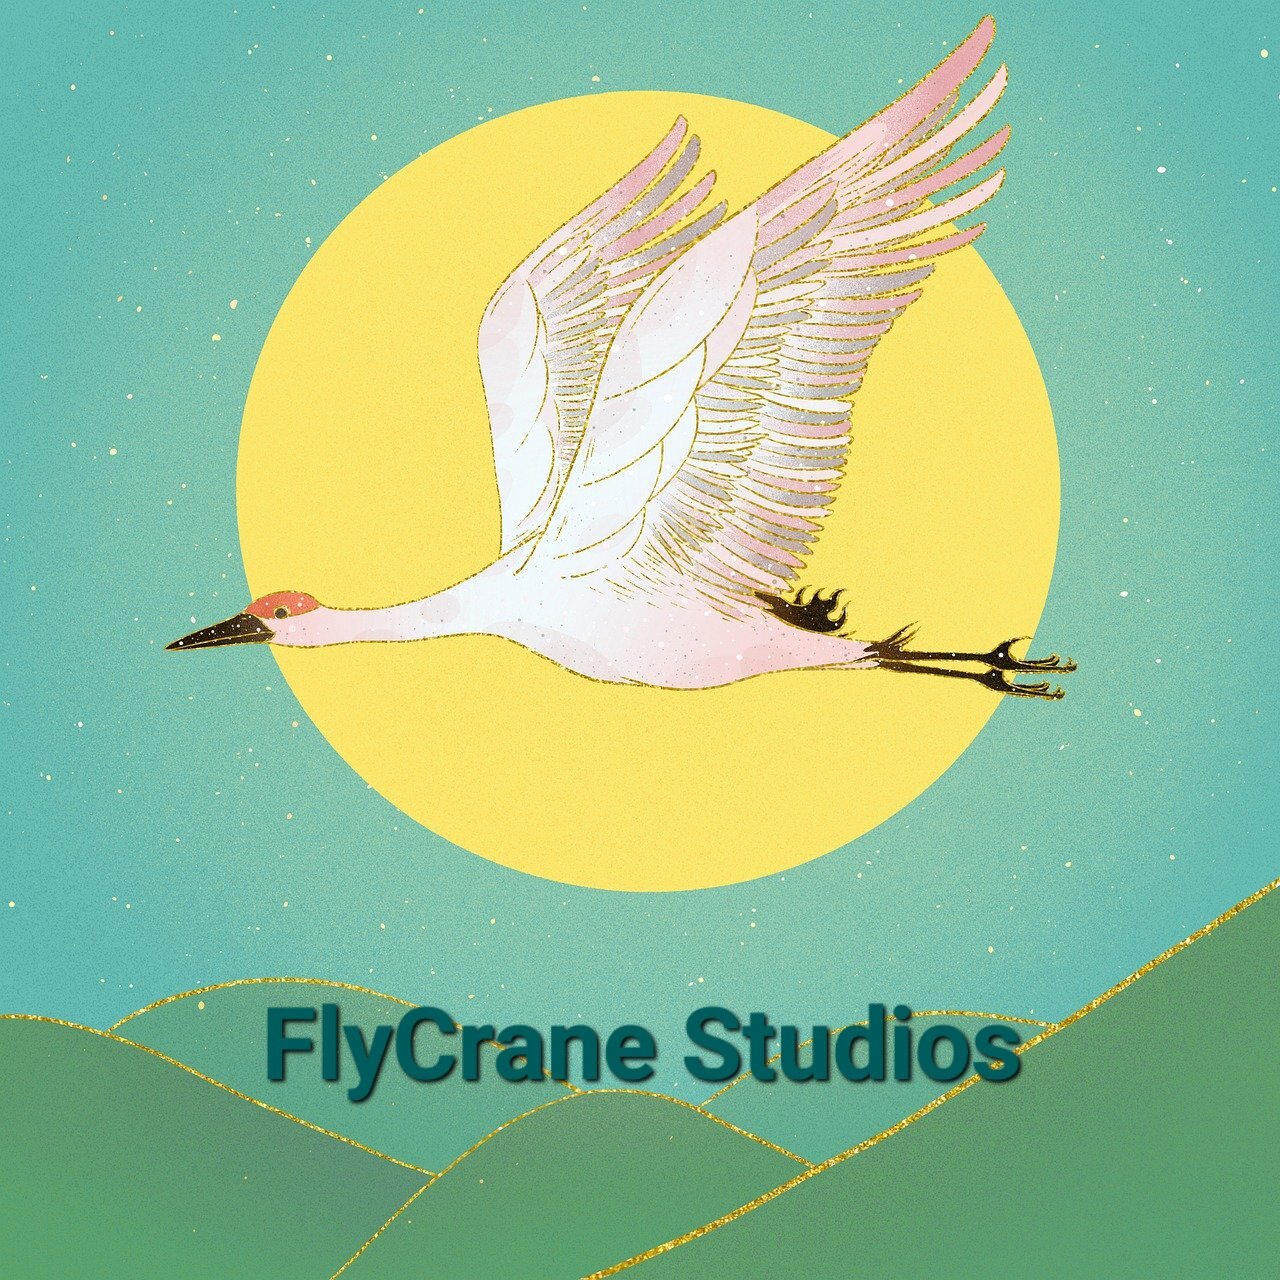 FlyCrane Studios